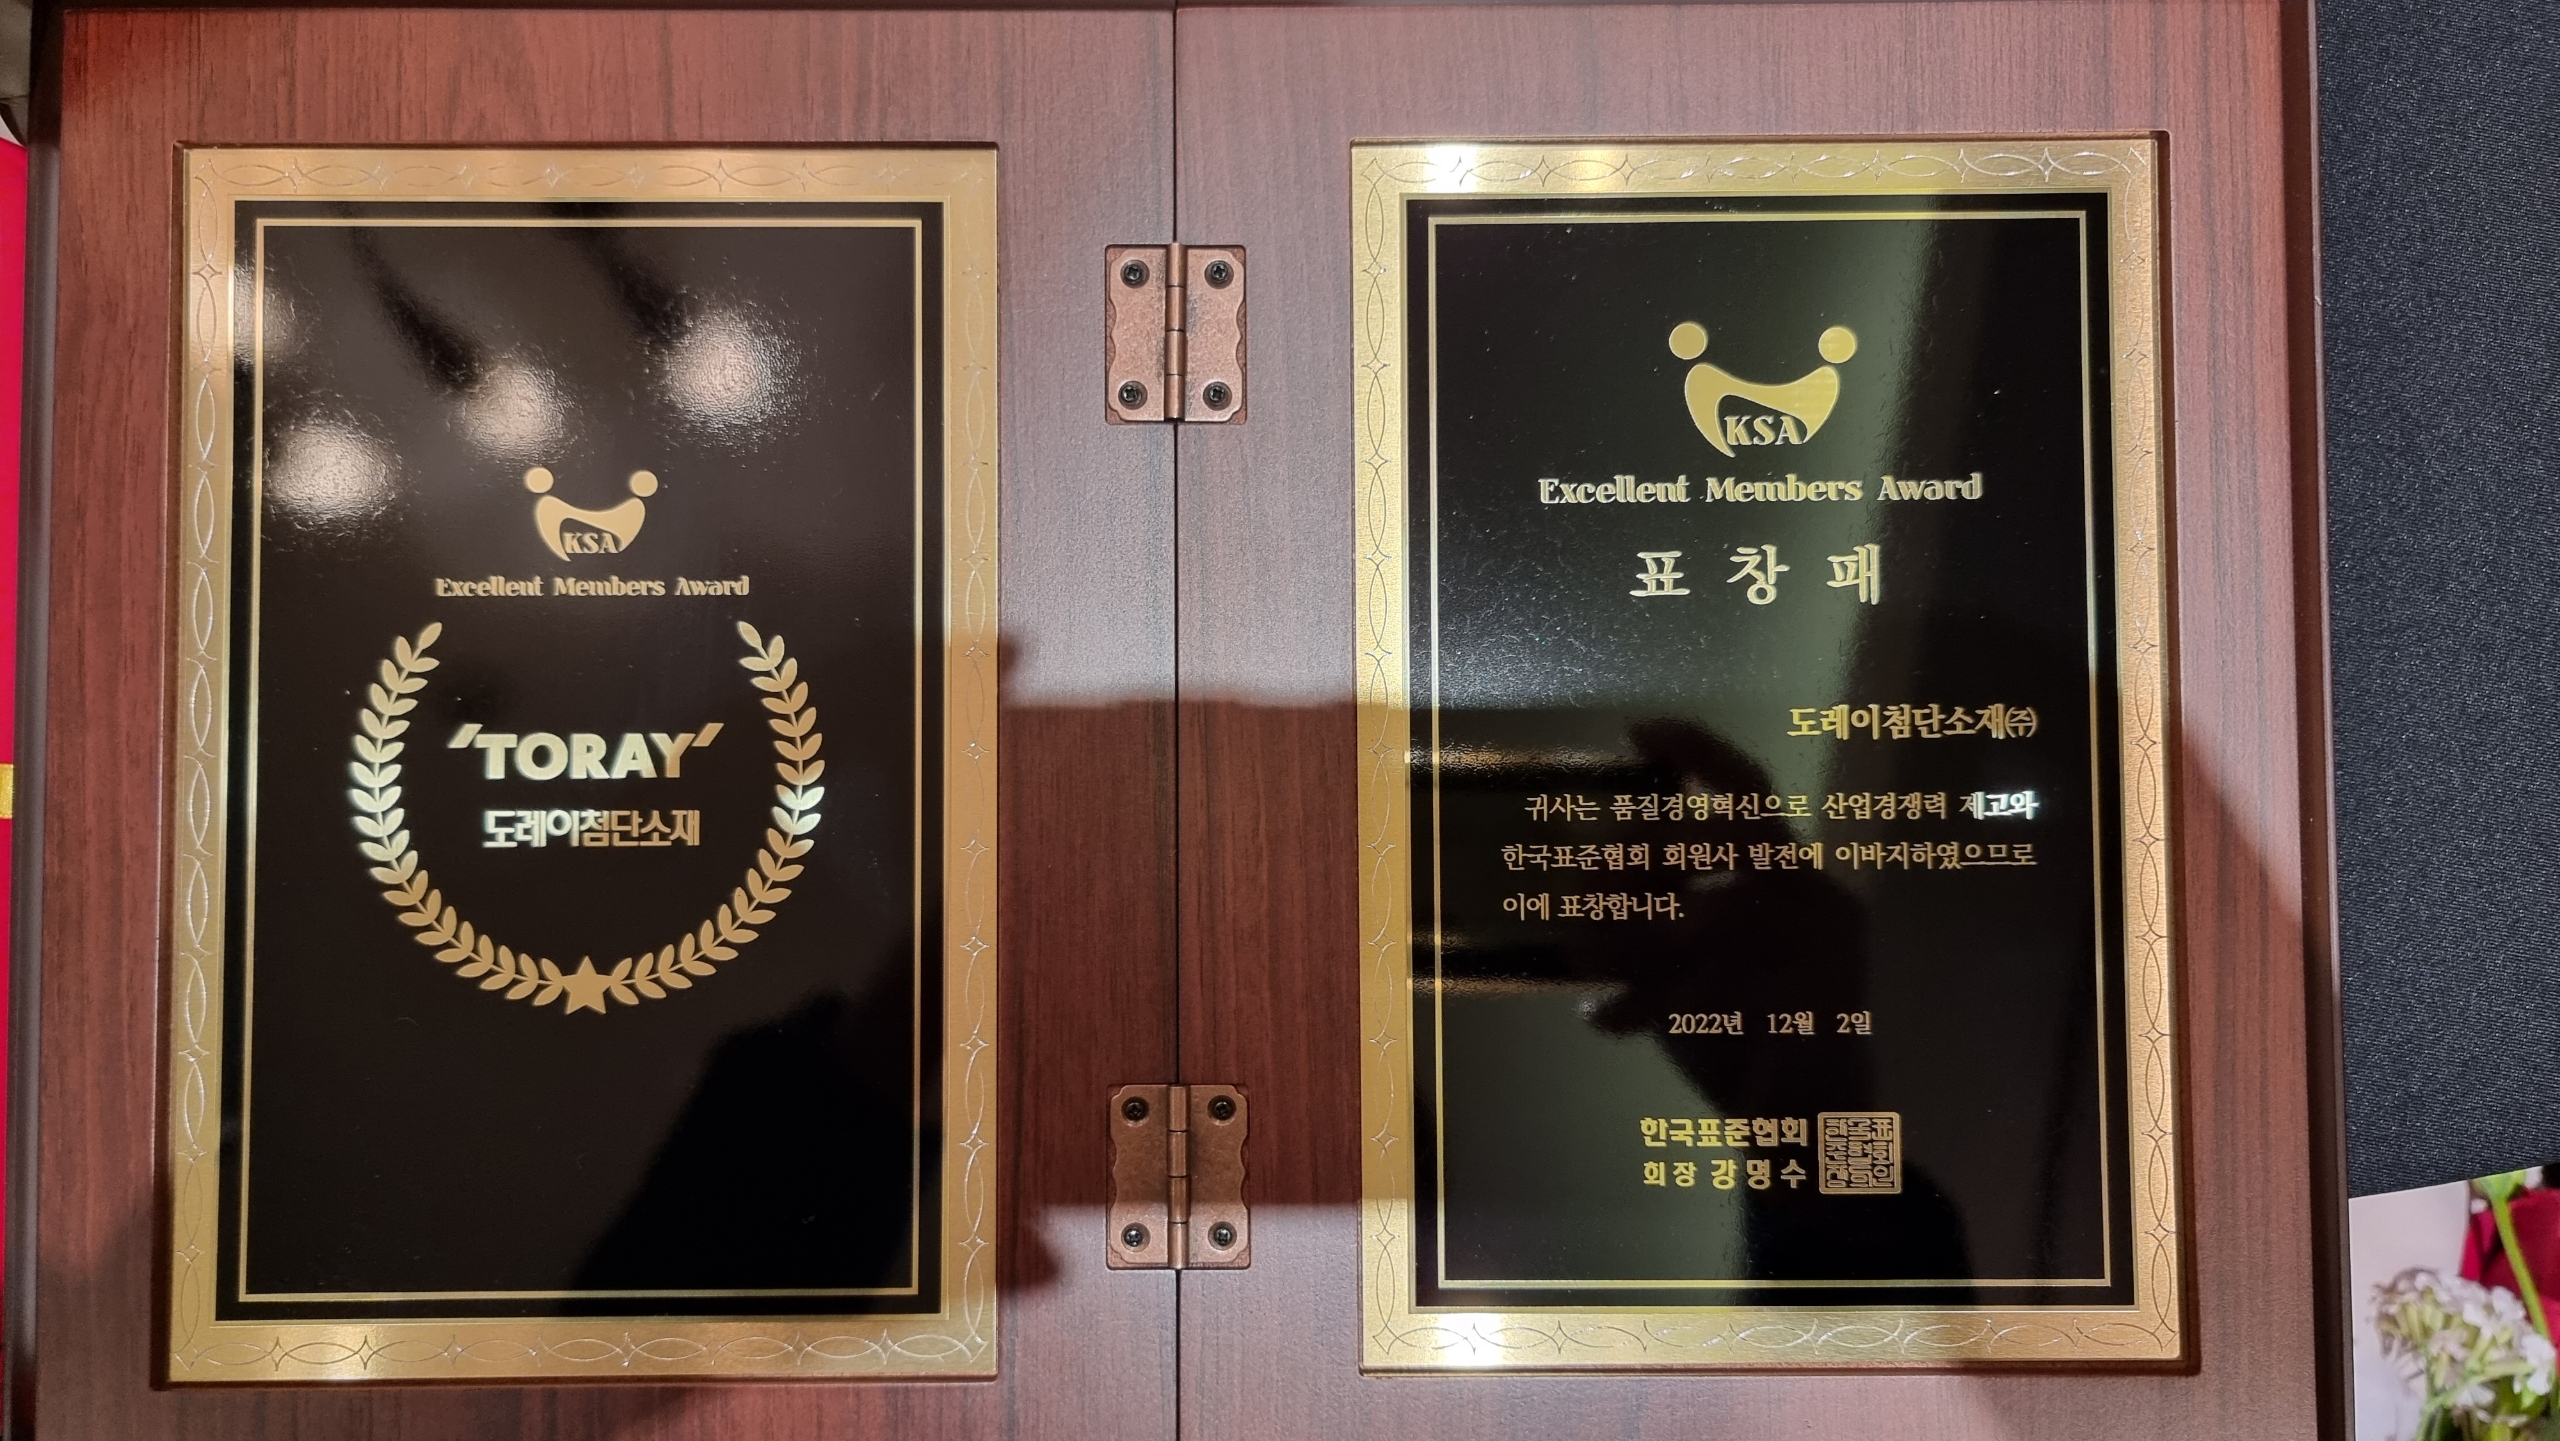 Award for the President of Korea Standards Association's Outstanding Member Companies Association.